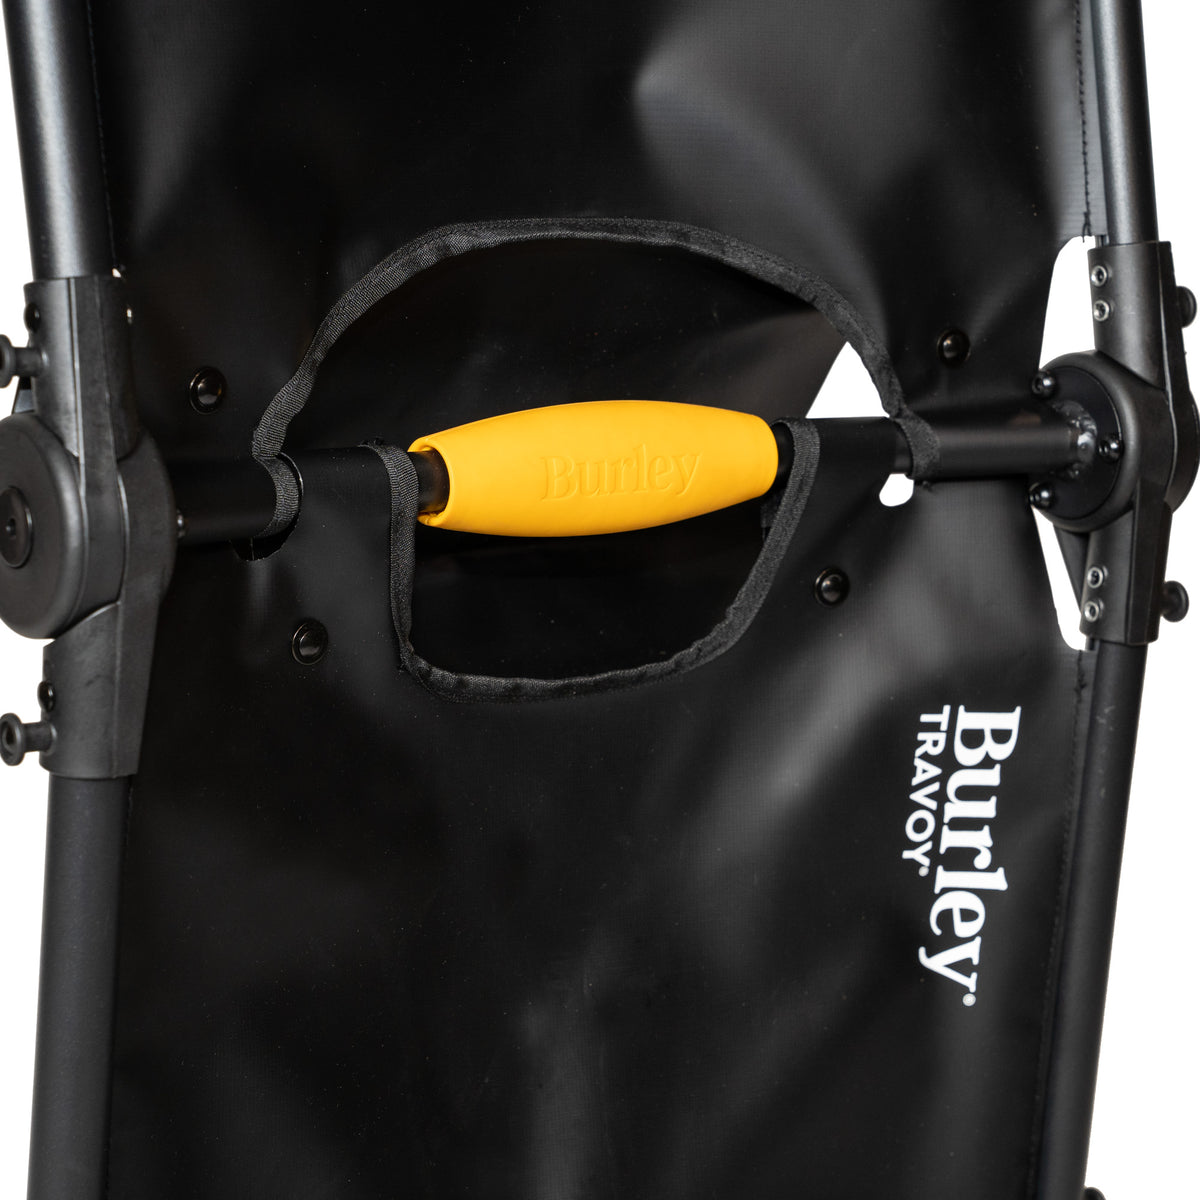 Black Travoy with yellow handle